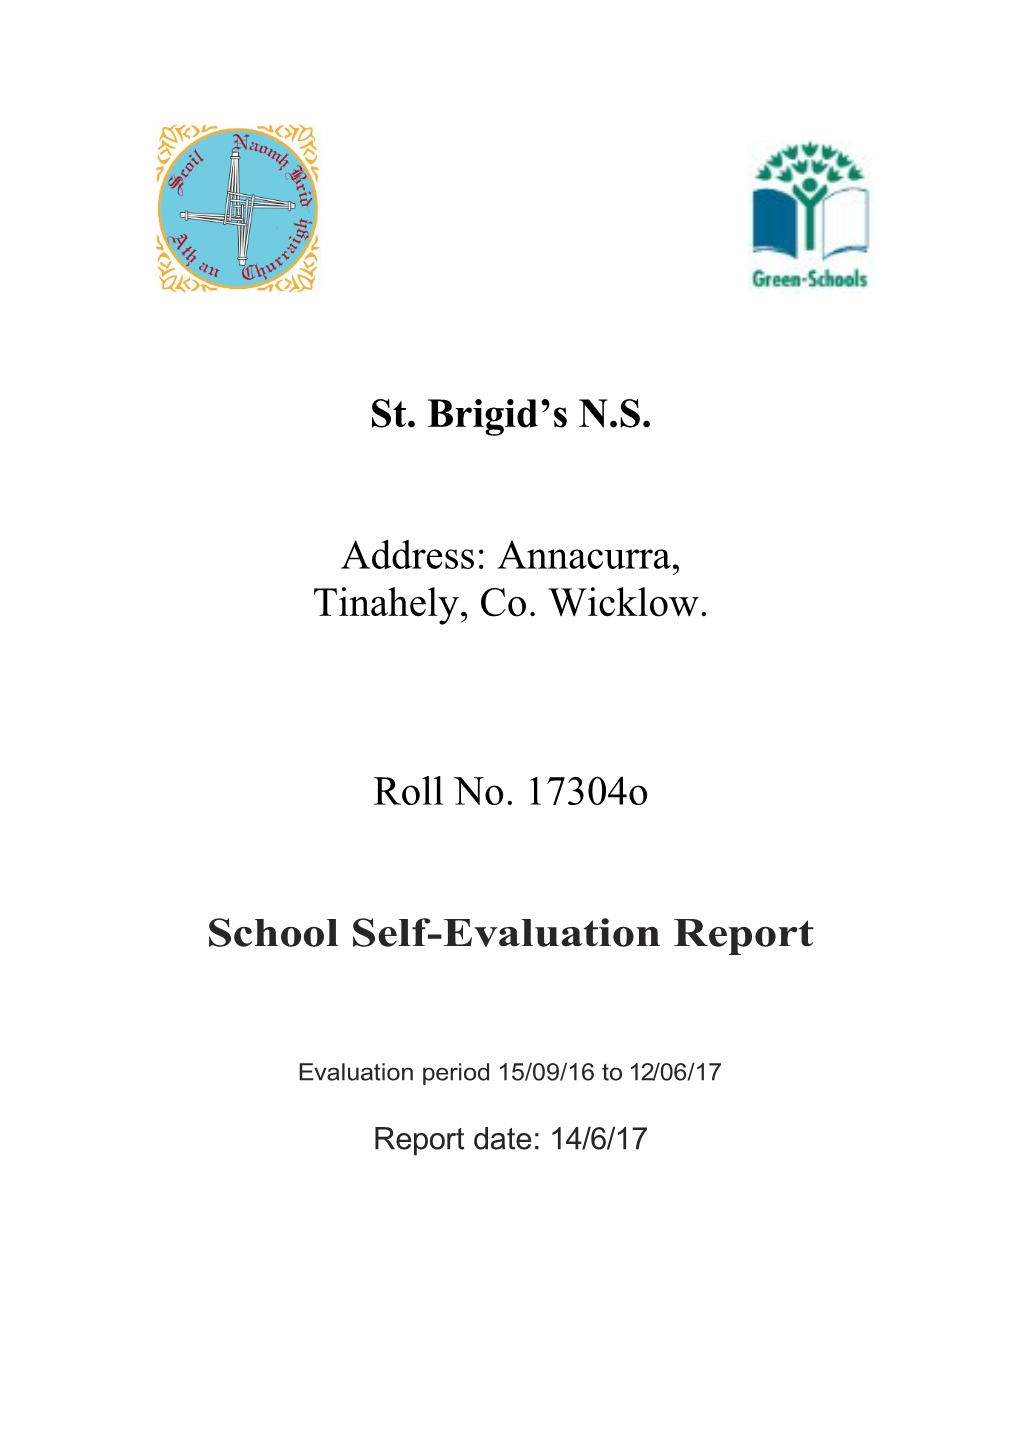 Schoolself-Evaluationreport